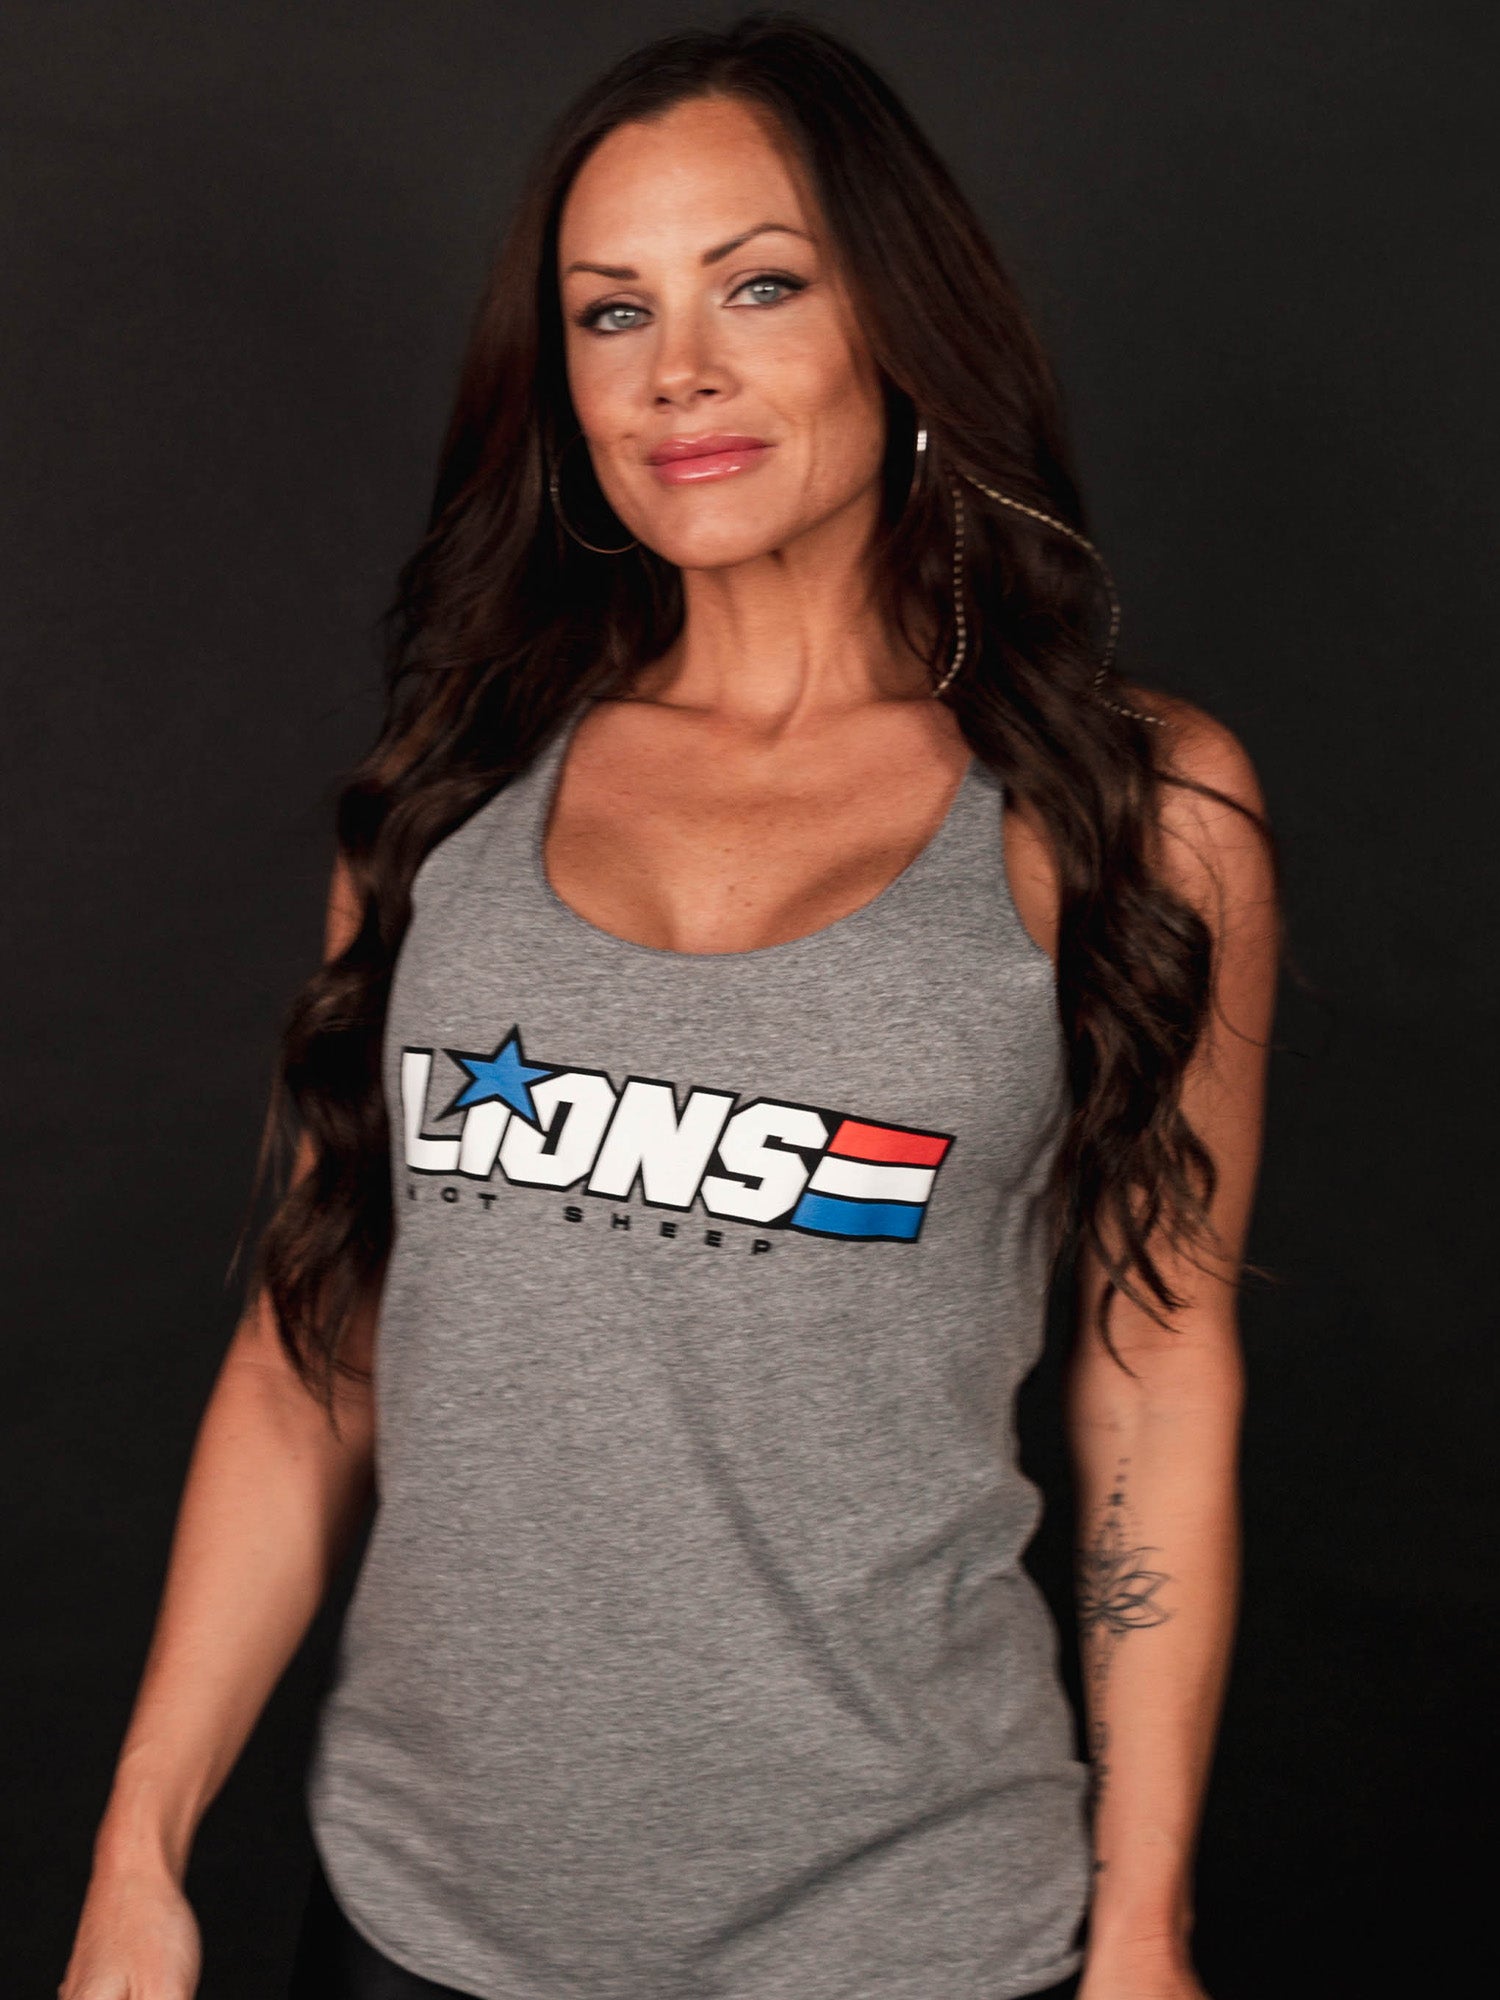 AMERICAN HERO Womens Tank - Lions Not Sheep ®